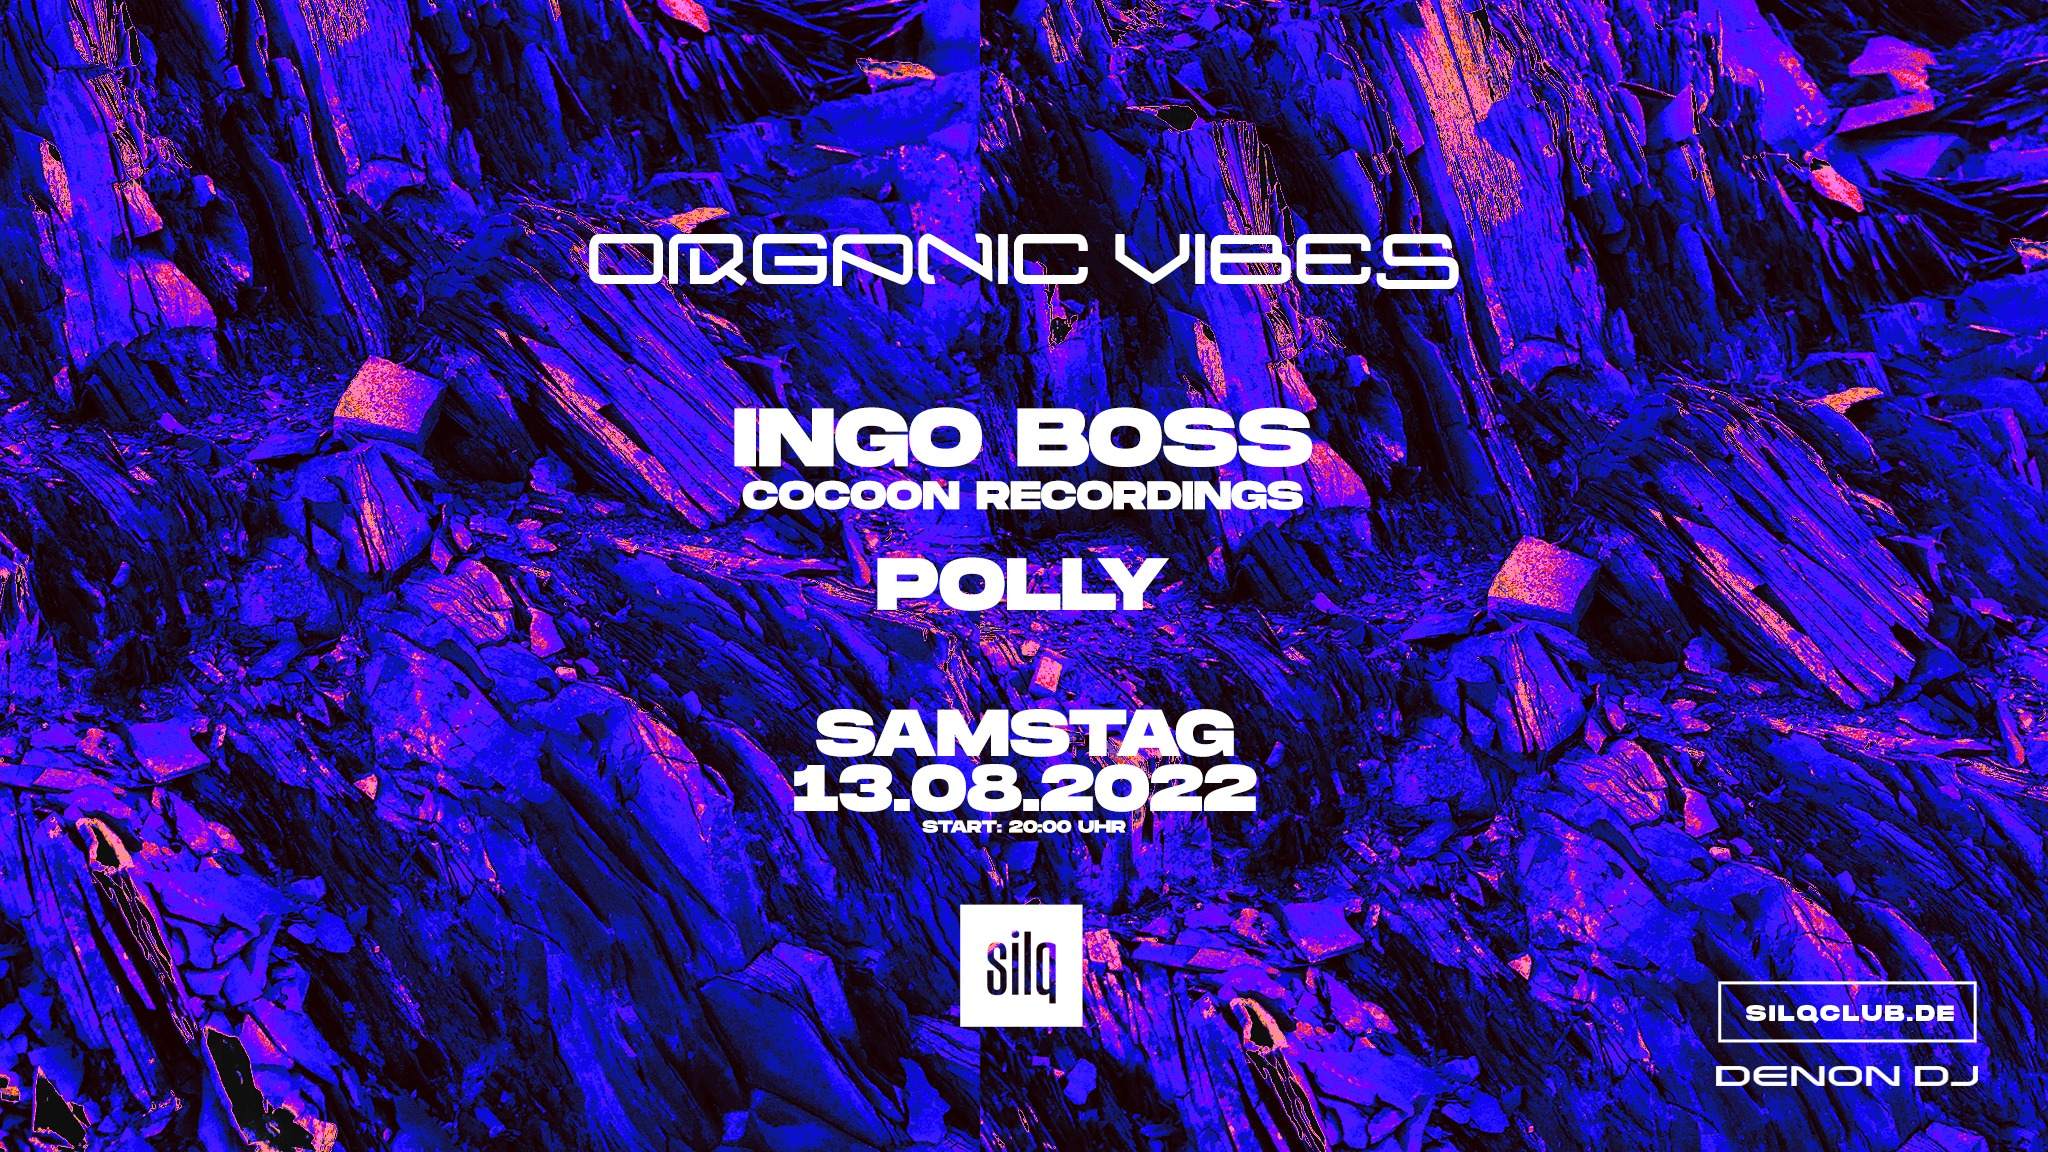 Organic Vibes with Ingo Boss, Polly - フライヤー表